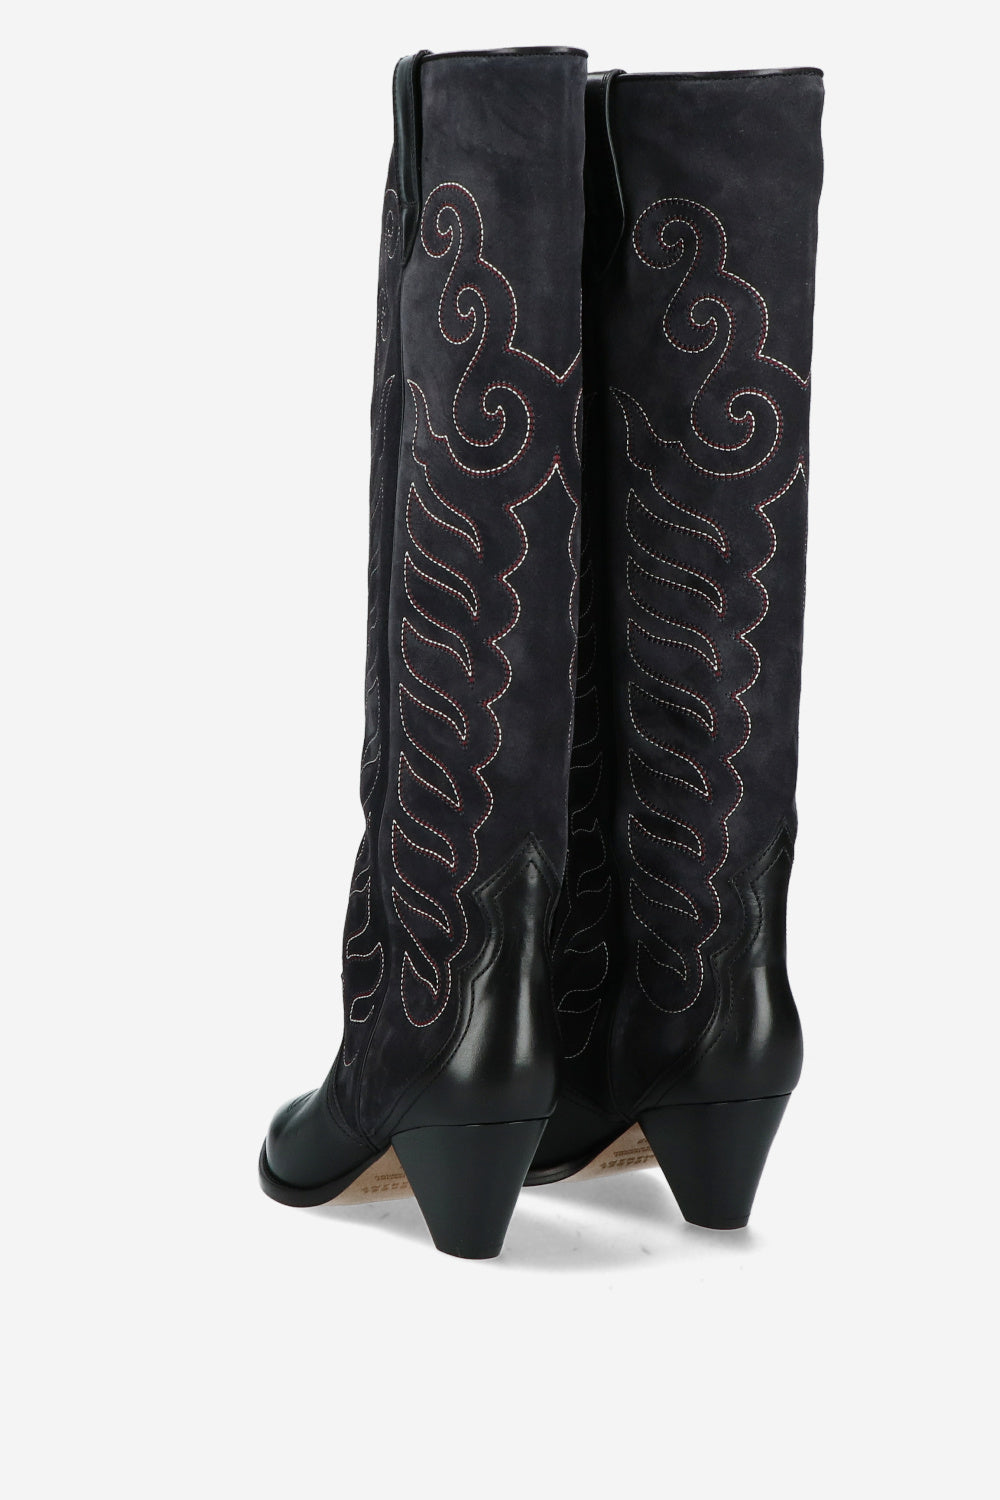 Liela High Boots Black/Faded Black